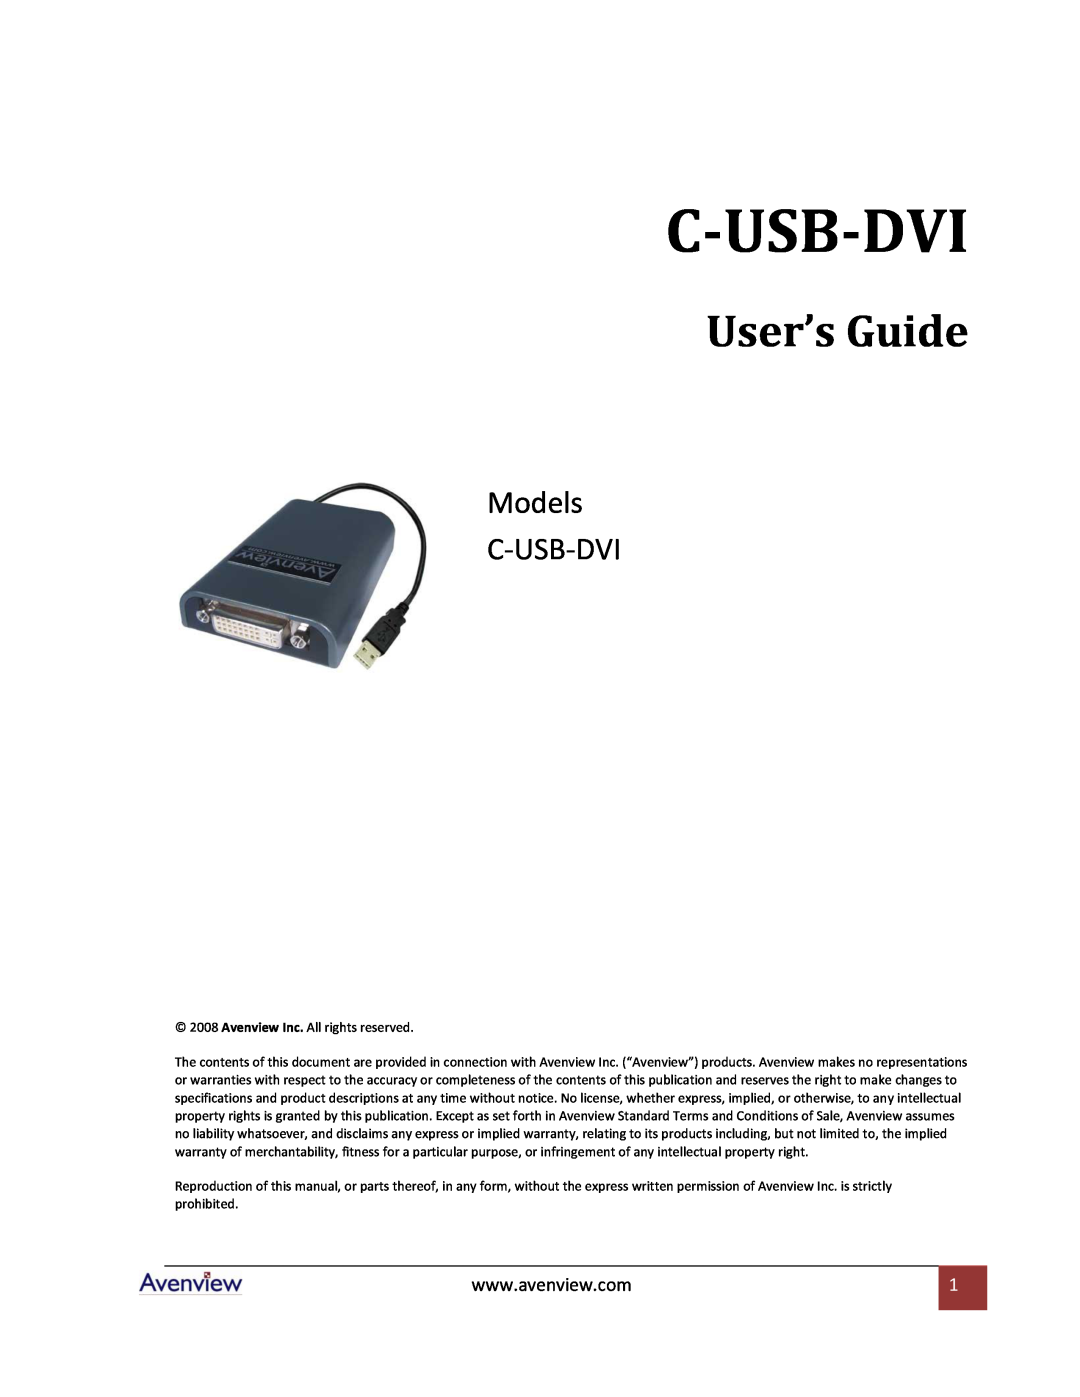 Avenview specifications C-Usb-Dvi, User’s Guide, Models C-USB-DVI 